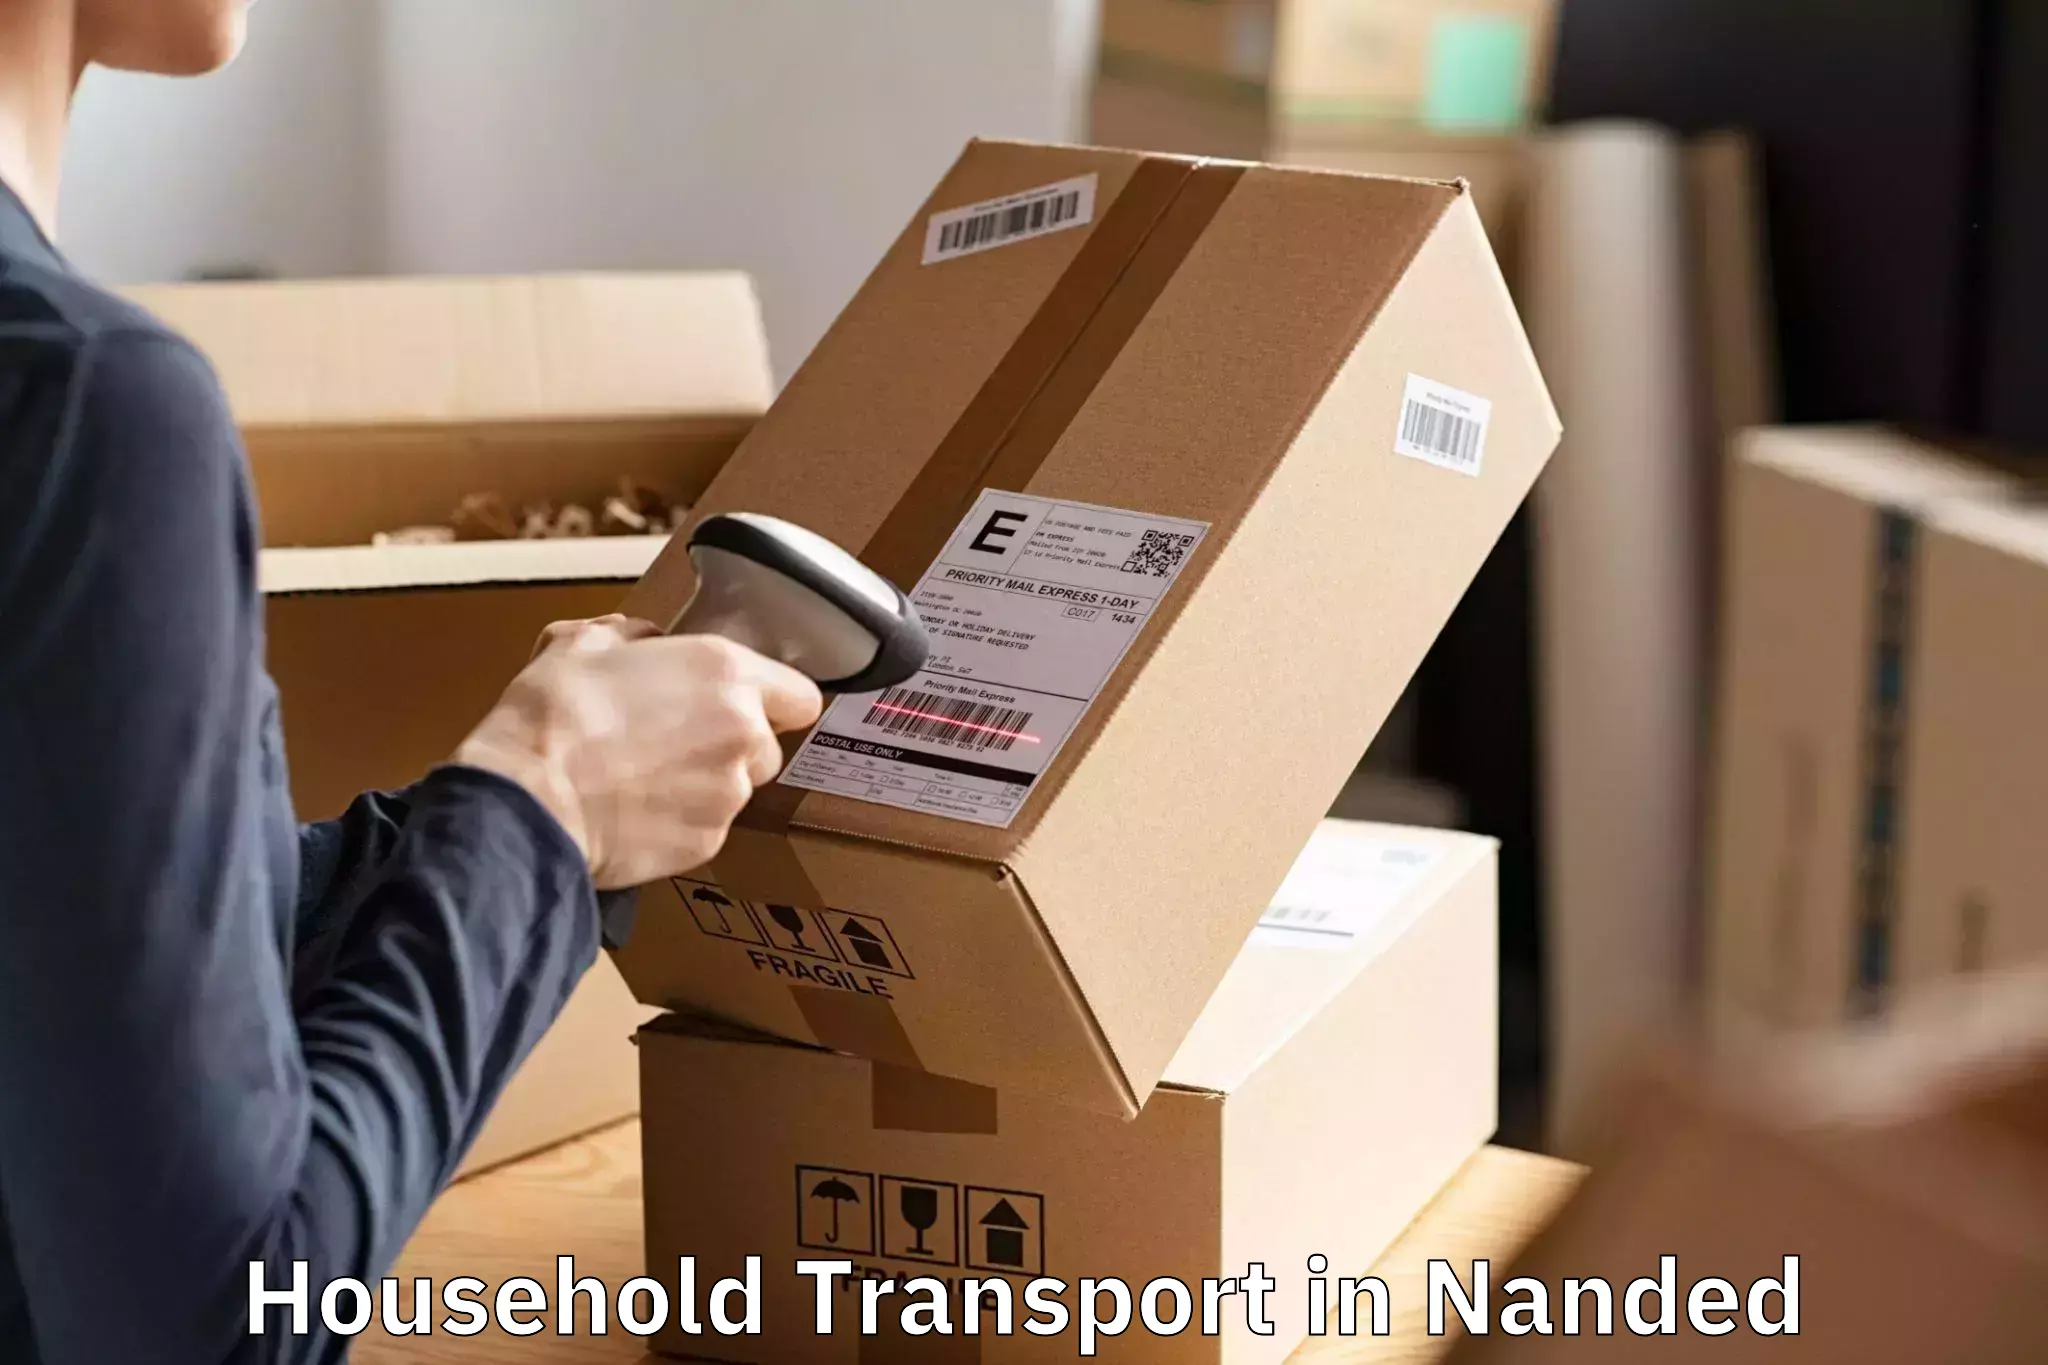 Comprehensive Household Transport in Nanded, Maharashtra (MH)